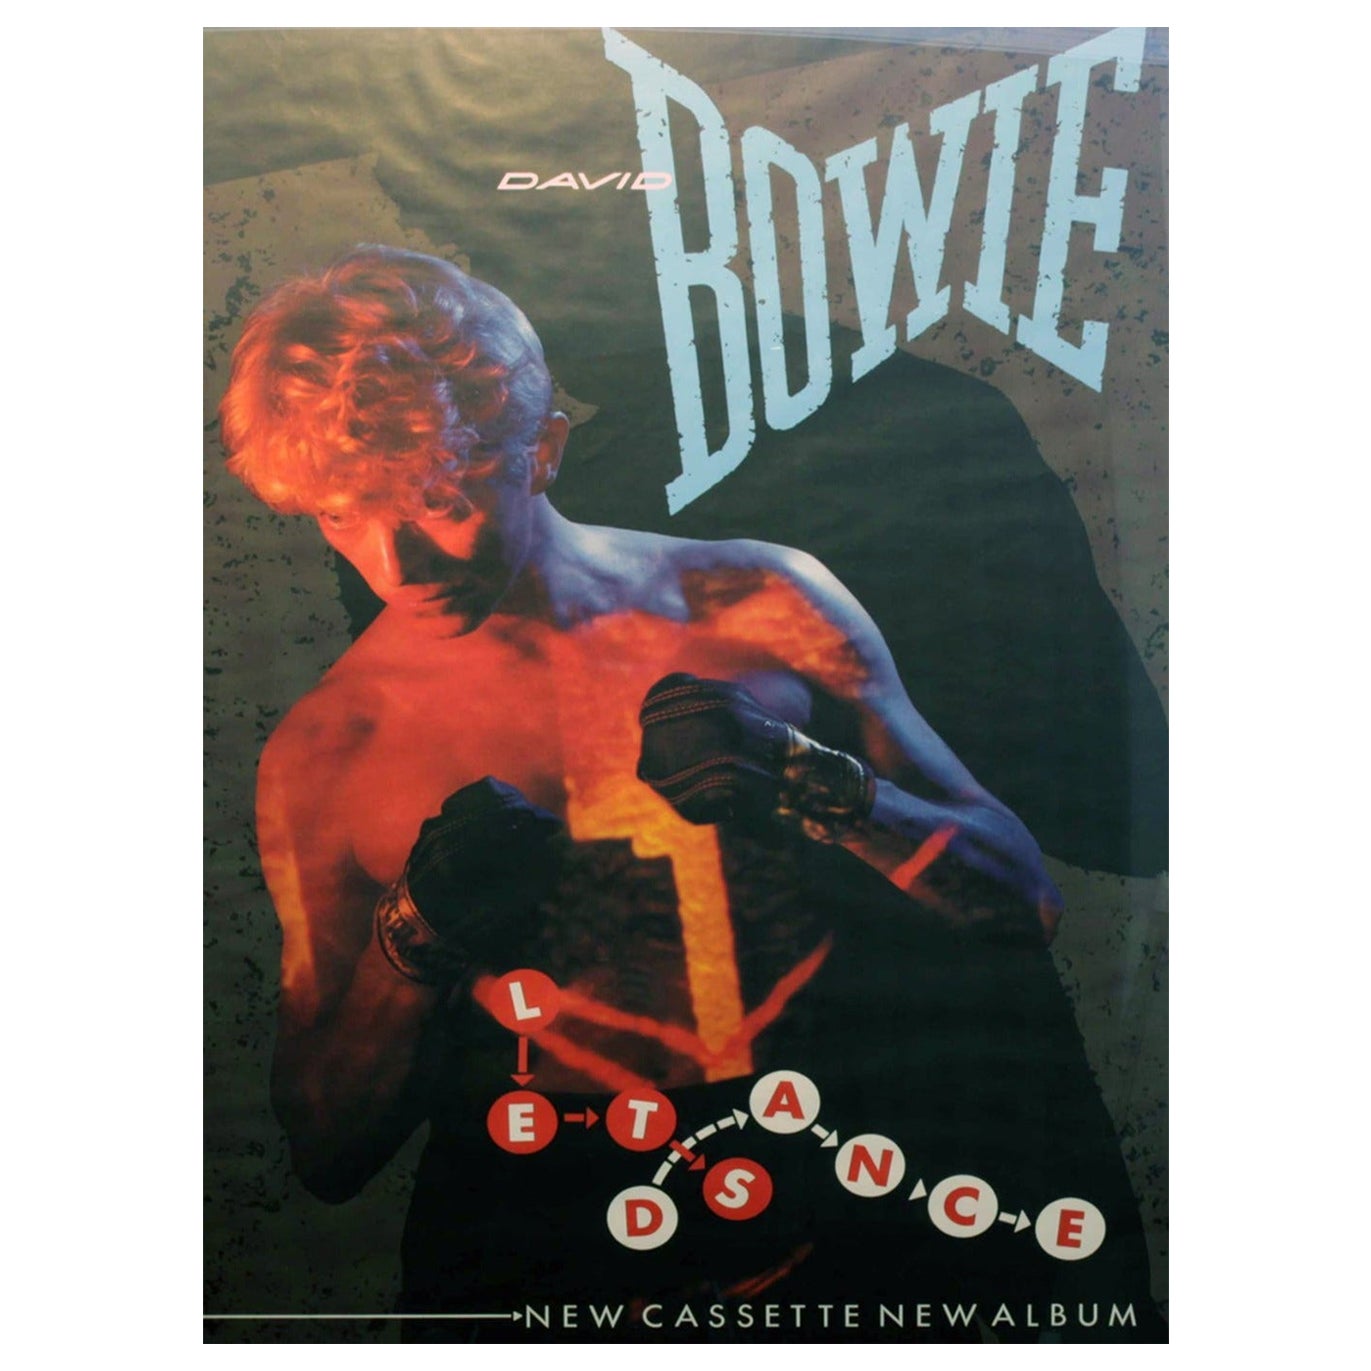 1983 David Bowie - Let's Dance Original Vintage Poster